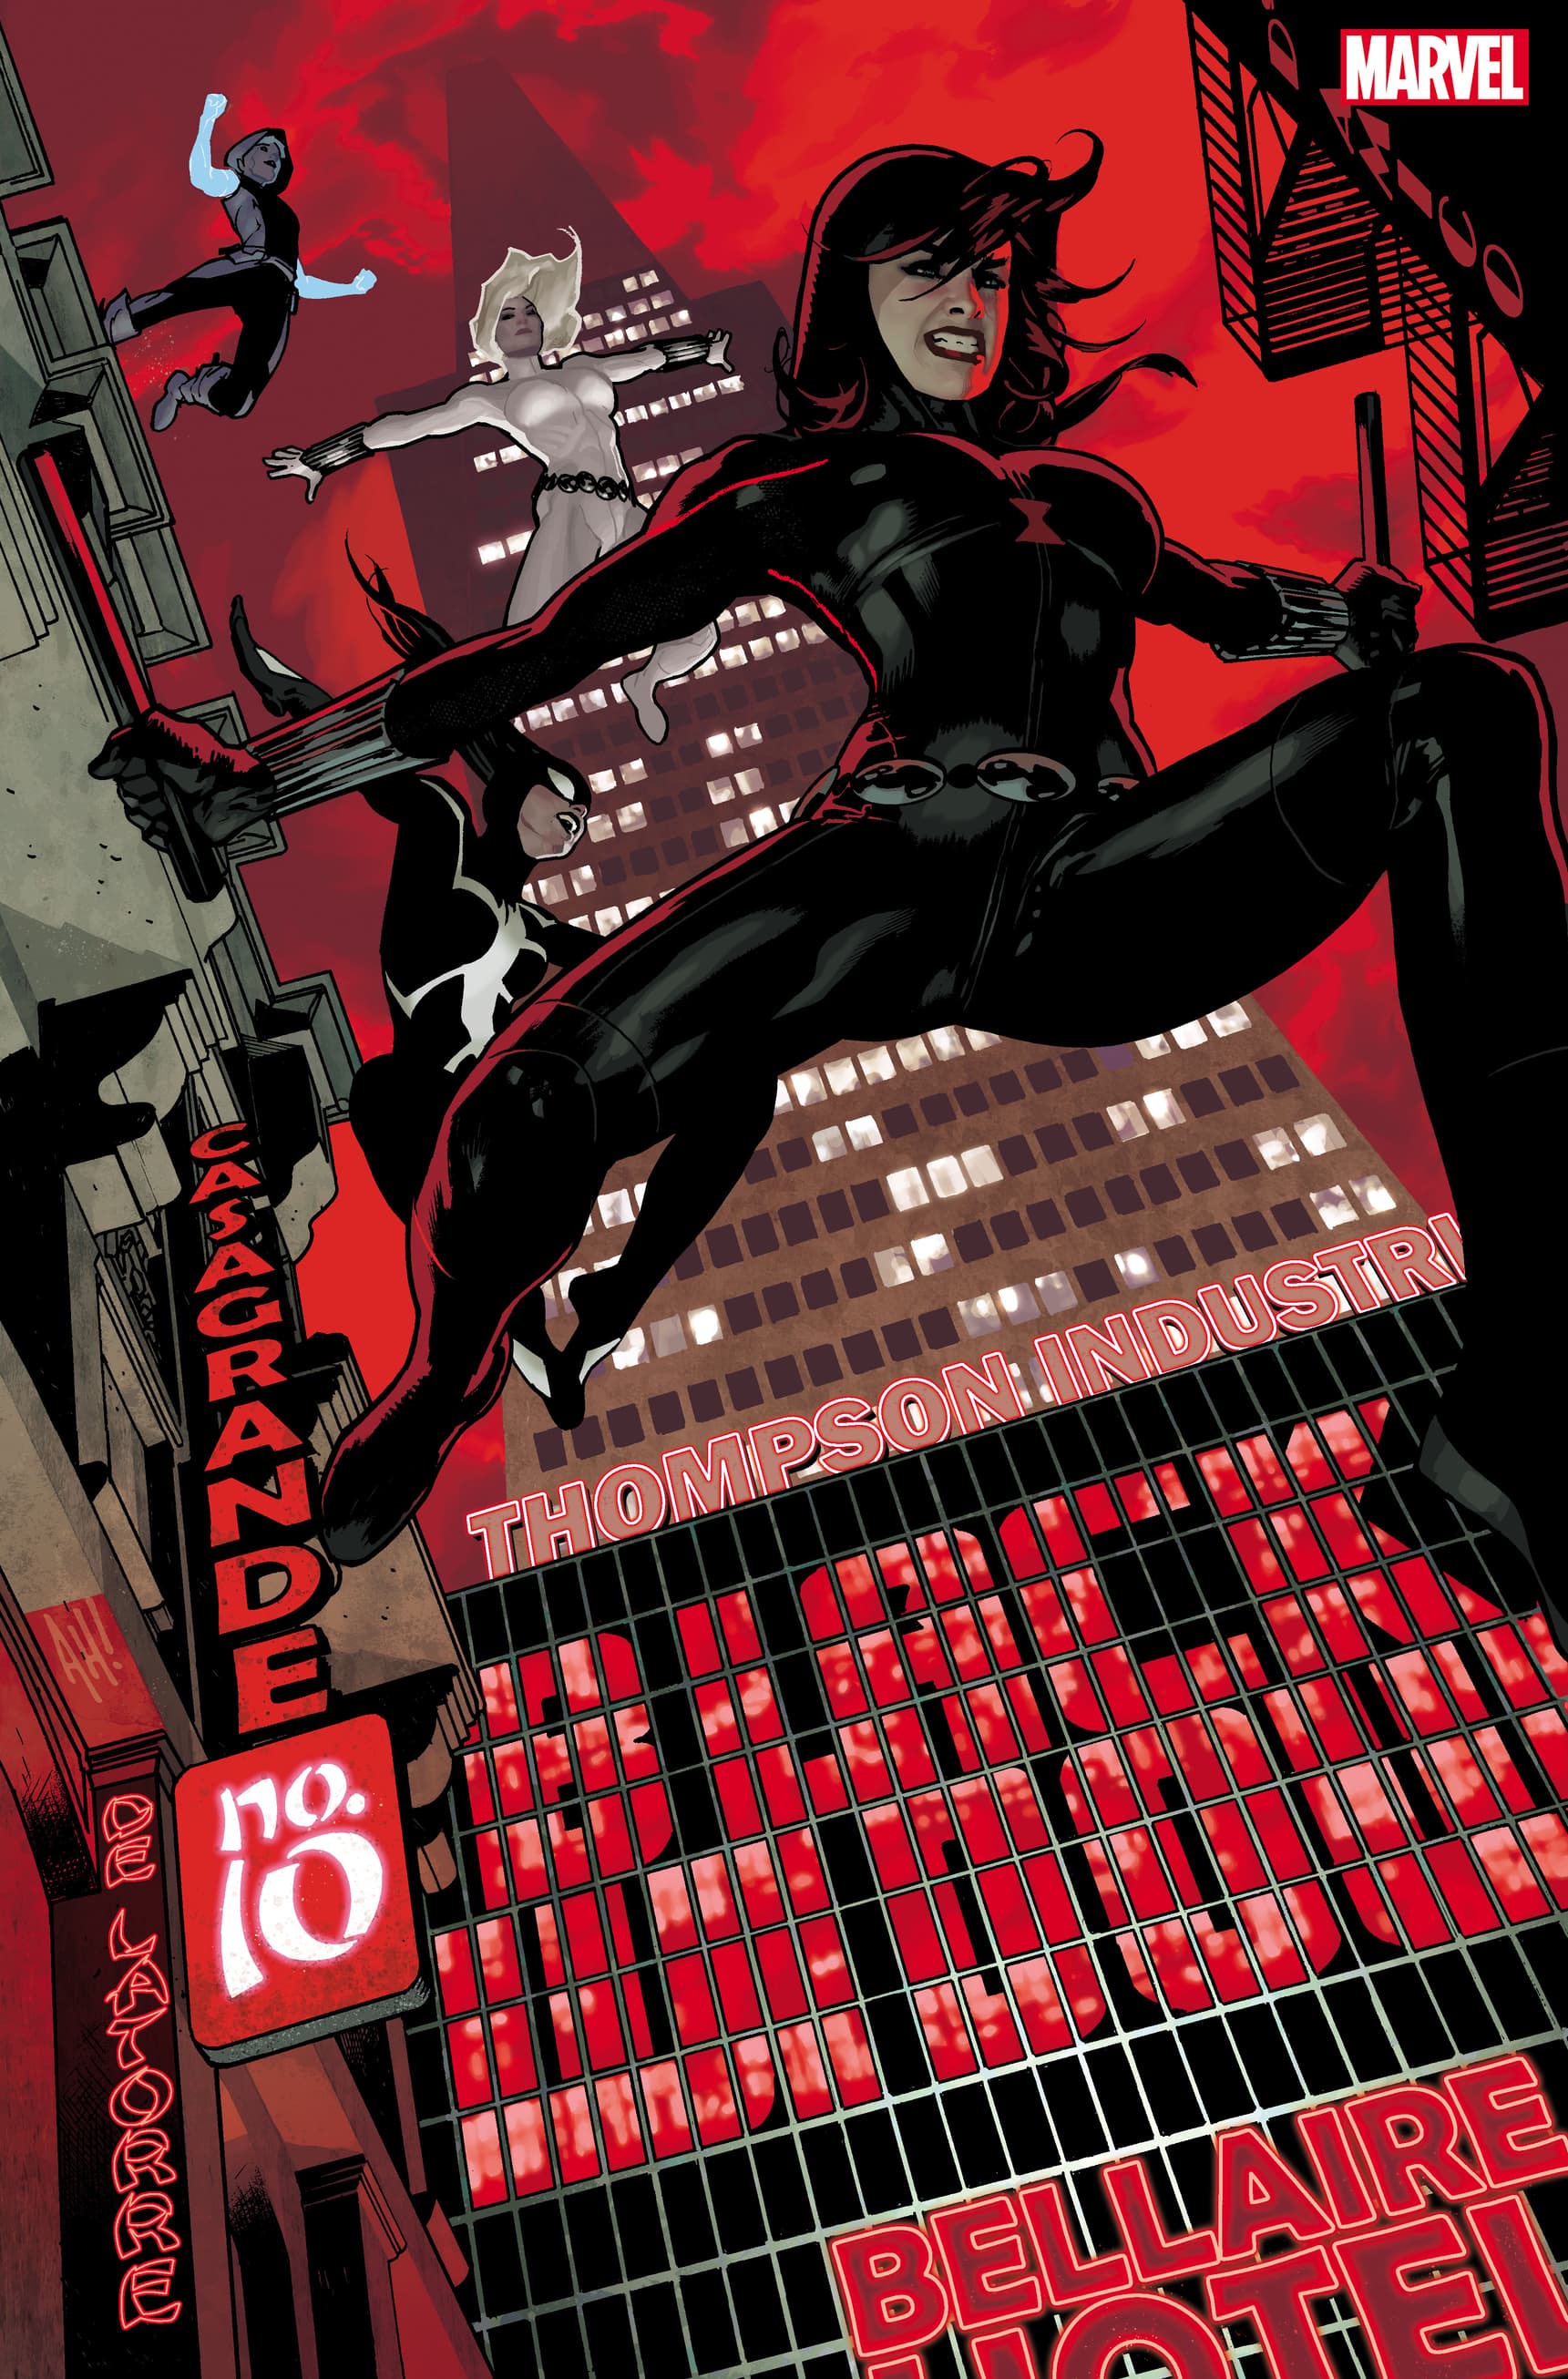 Black Widow #10 Cover by Adam Hughes